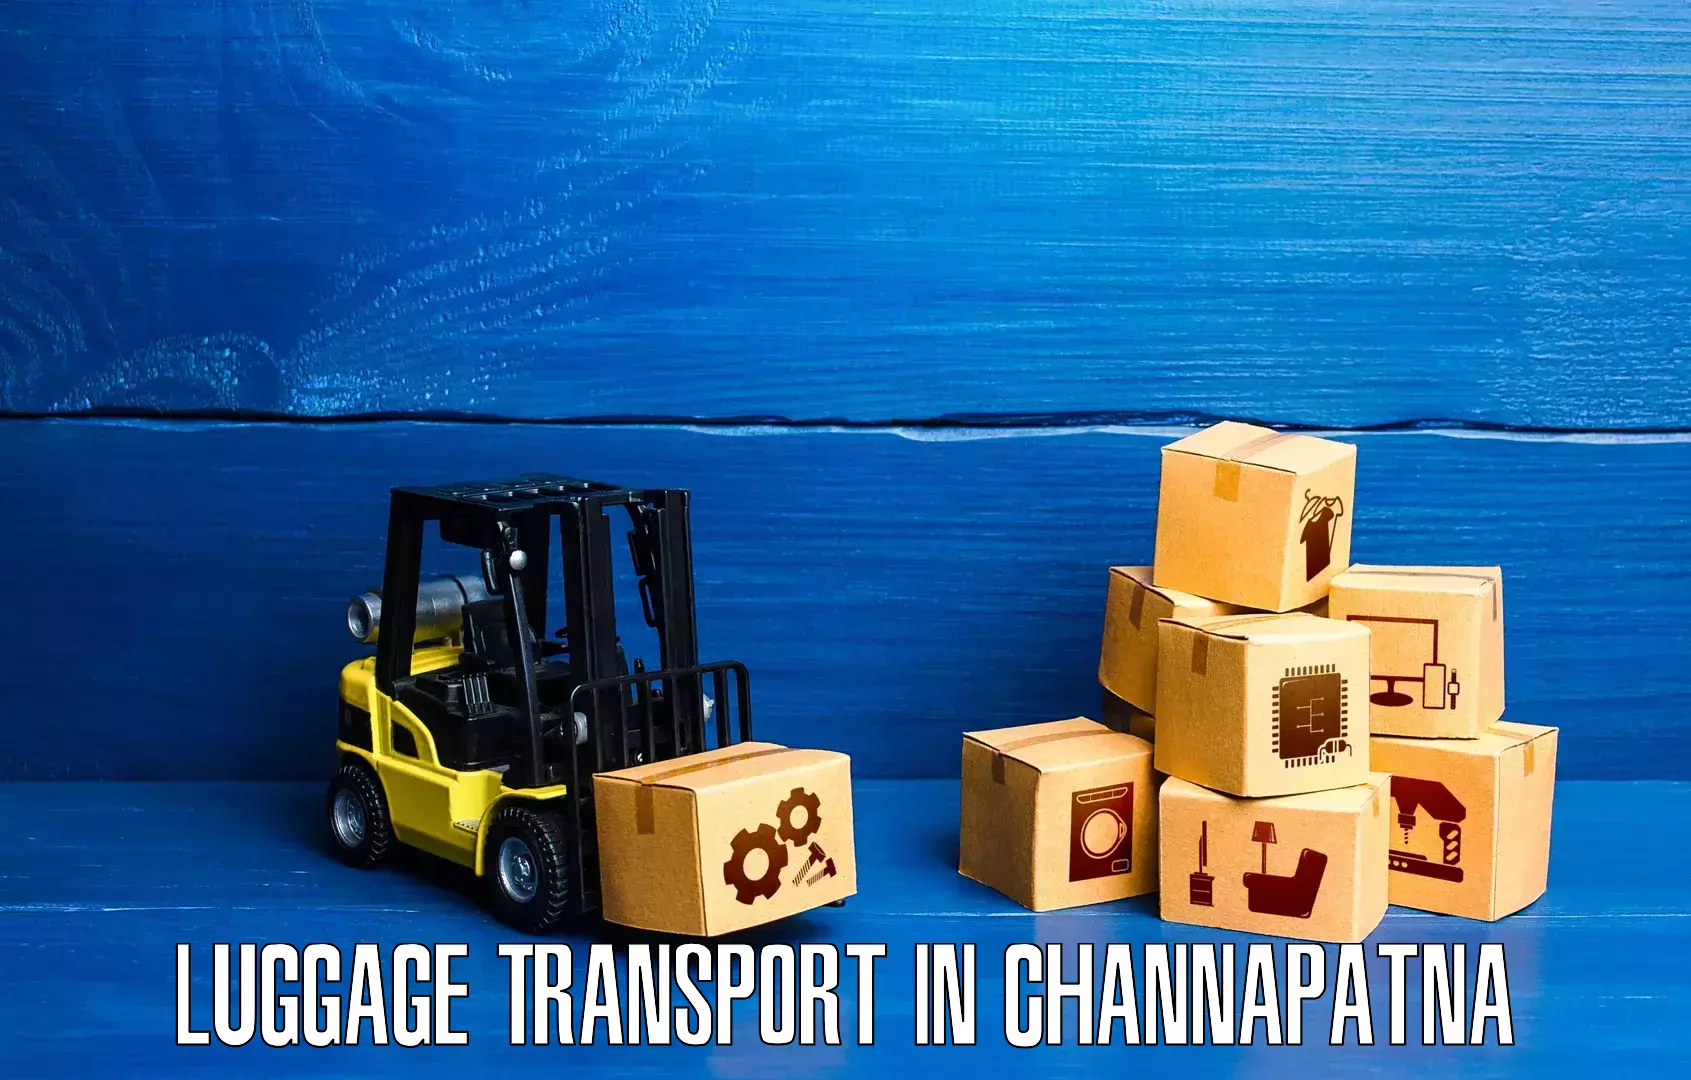 Multi-destination luggage transport in Channapatna